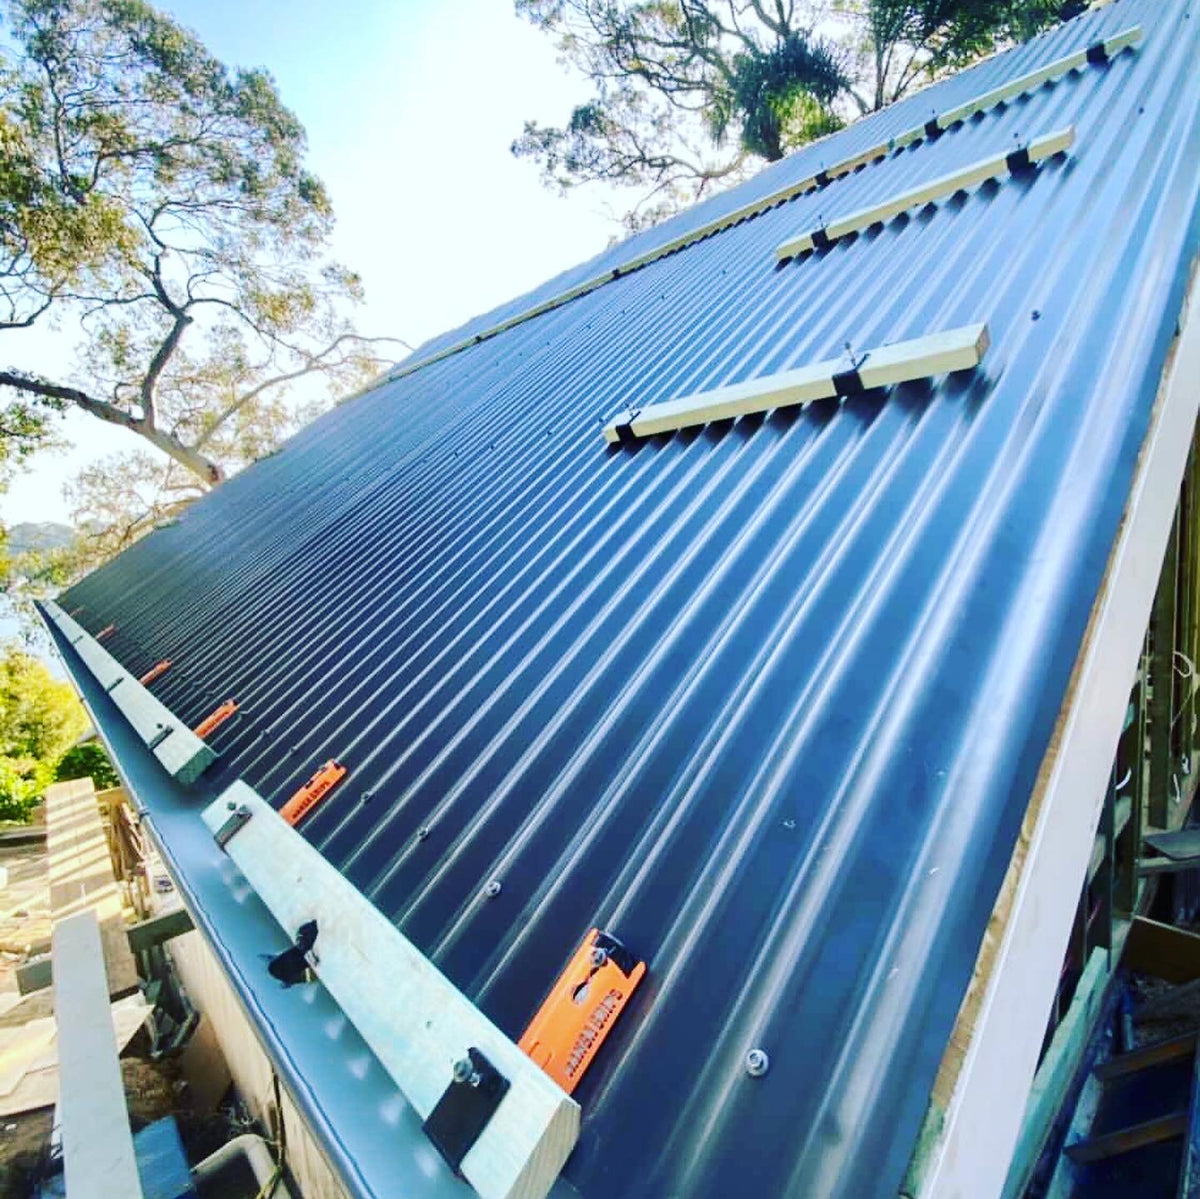 Ranga Grips – Roof Safety - Australian Business